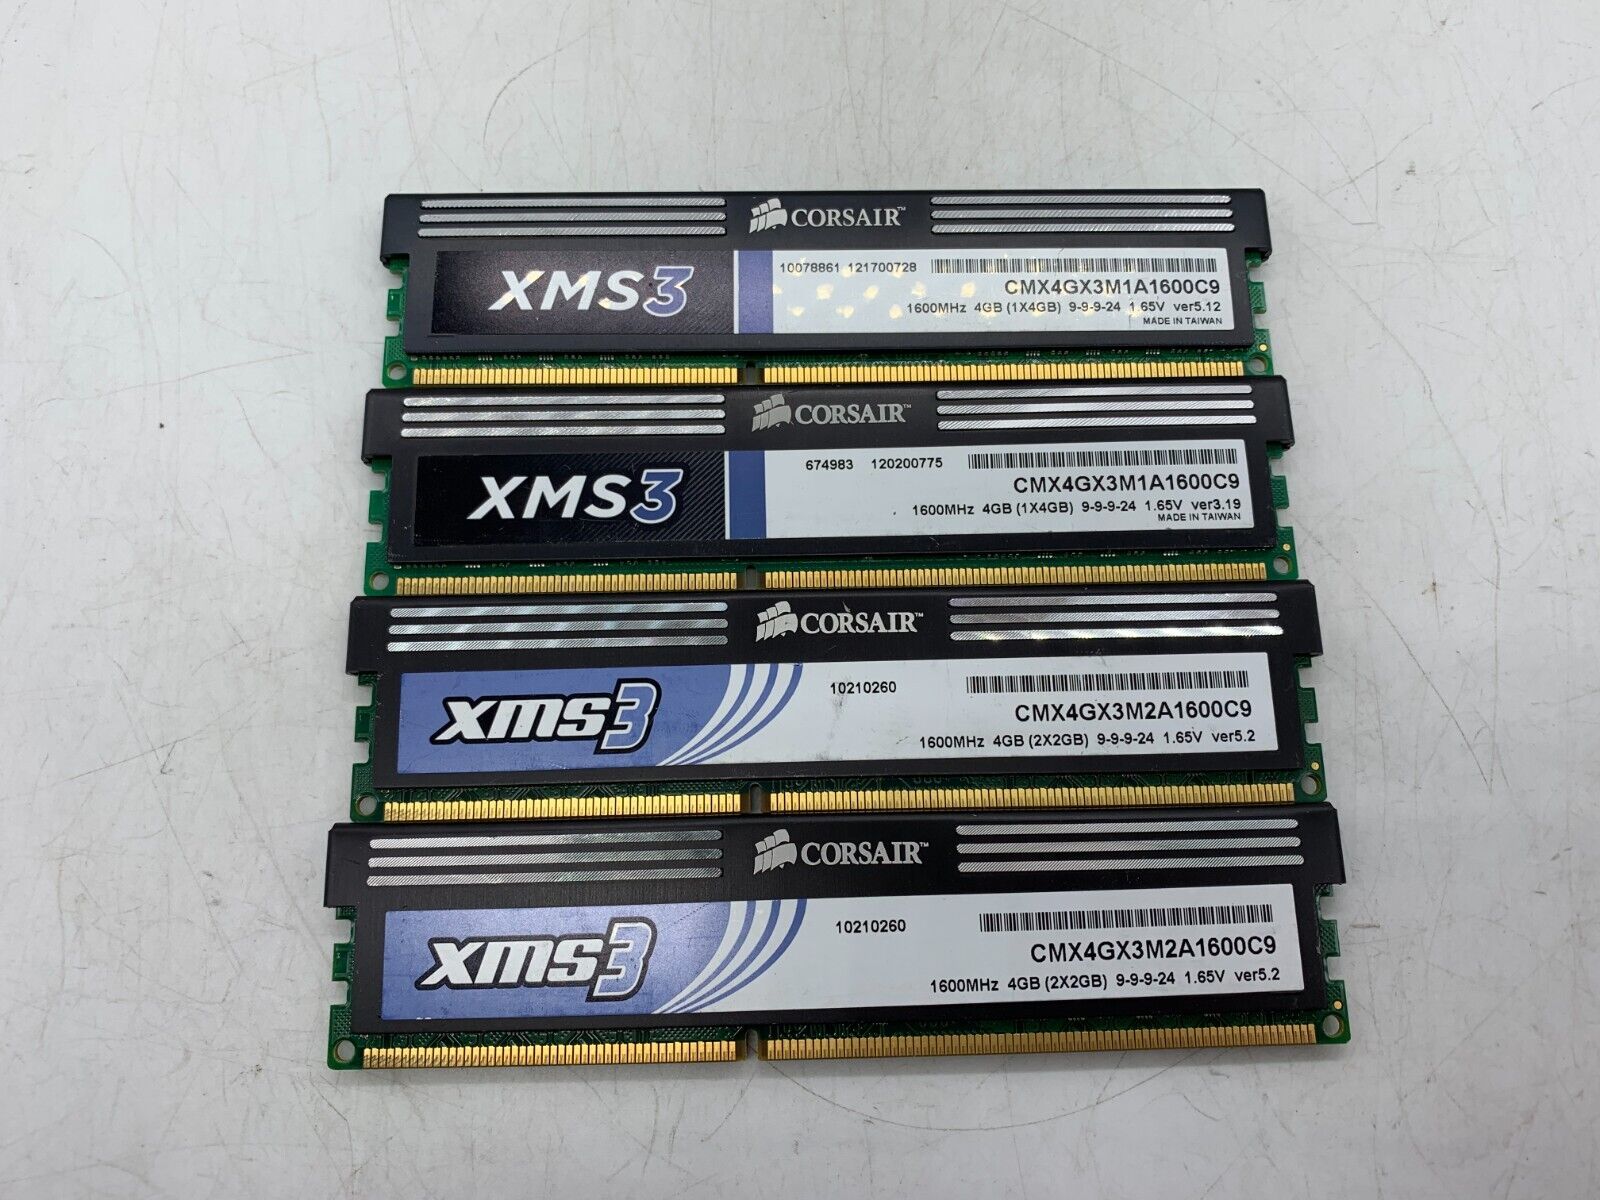 Corsair XMS3 12GB (2x 2GB, 2x 4GB) DDR3 1600 Desktop Memory CMX4GX3M1A1600C9